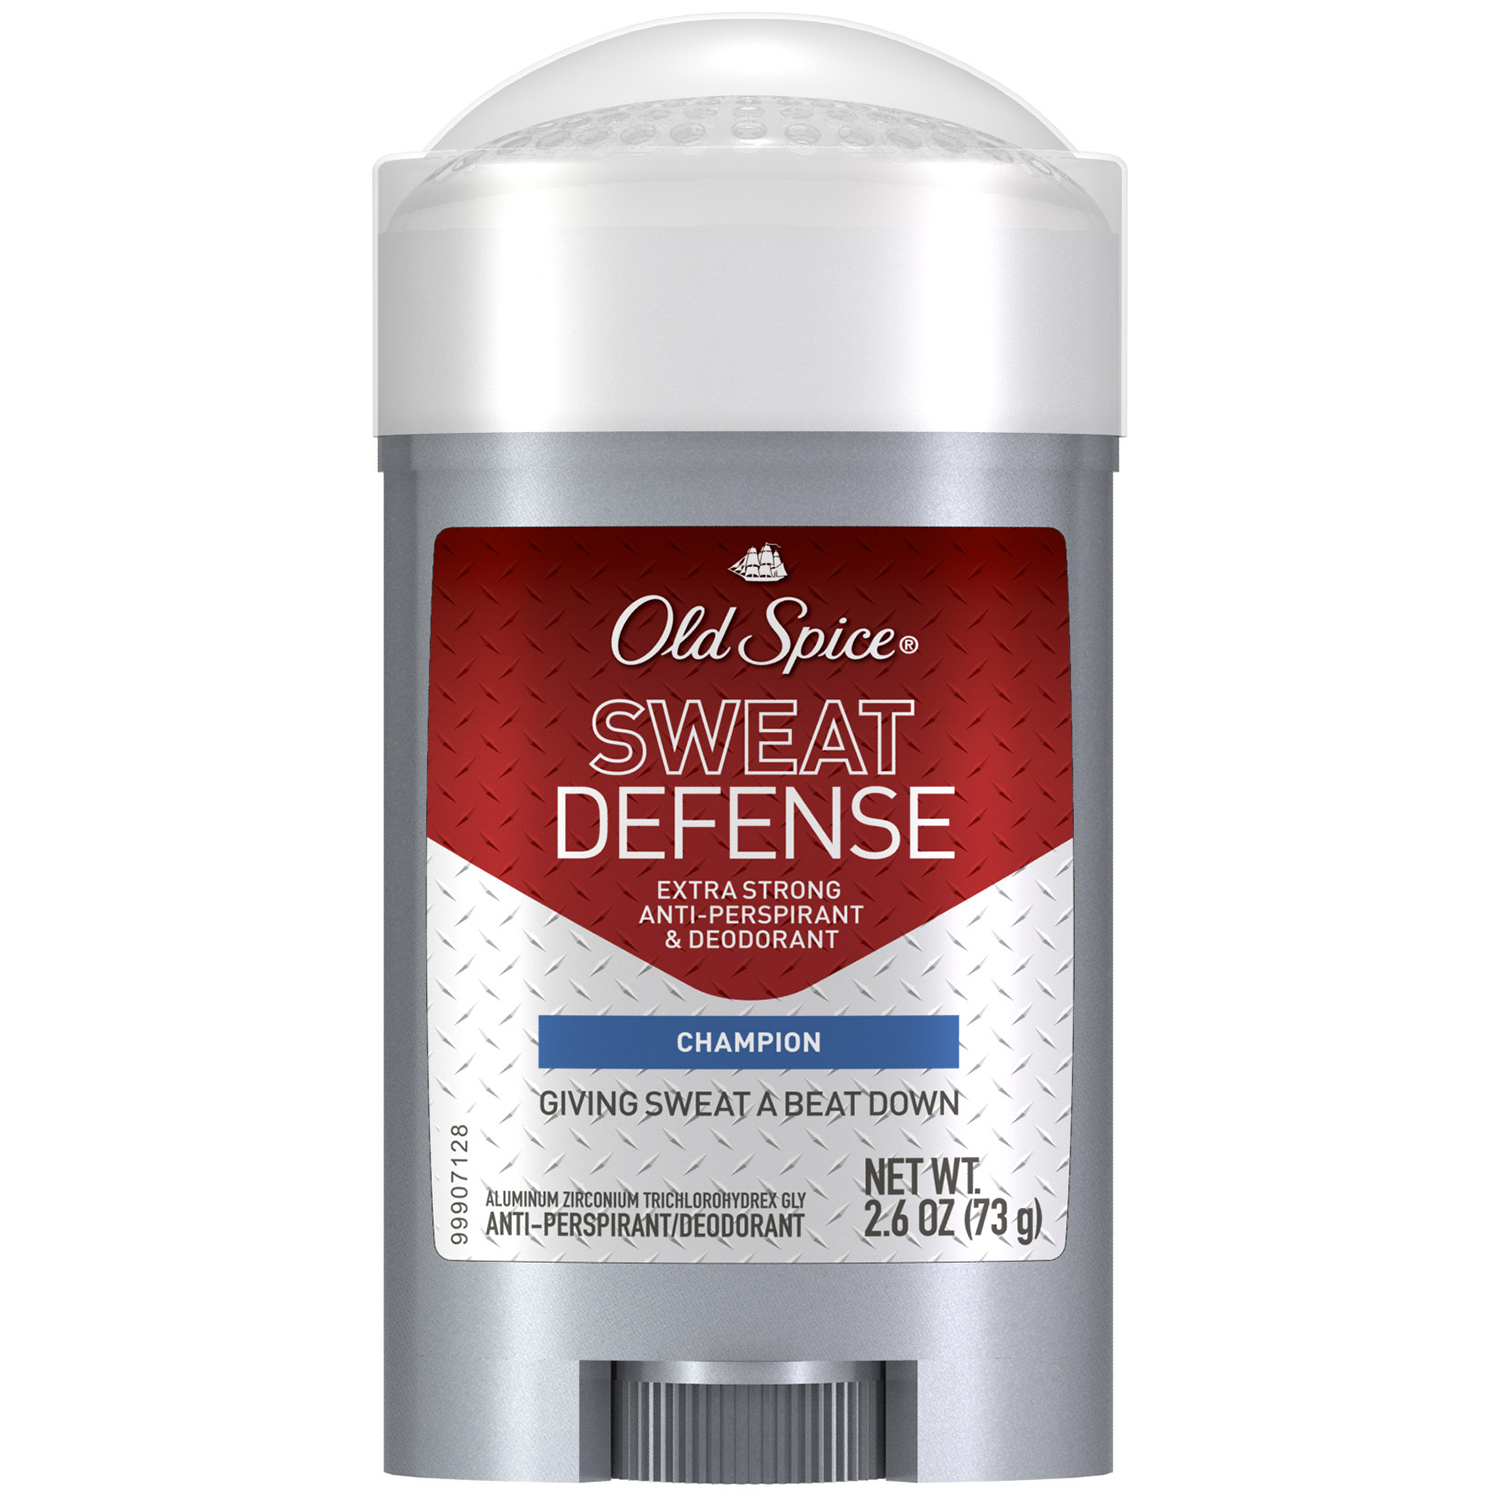 Old Spice Red Zone Sweat Defense Antiperspirant & Deodorant, Soft Solid, Champion, 2.6 oz